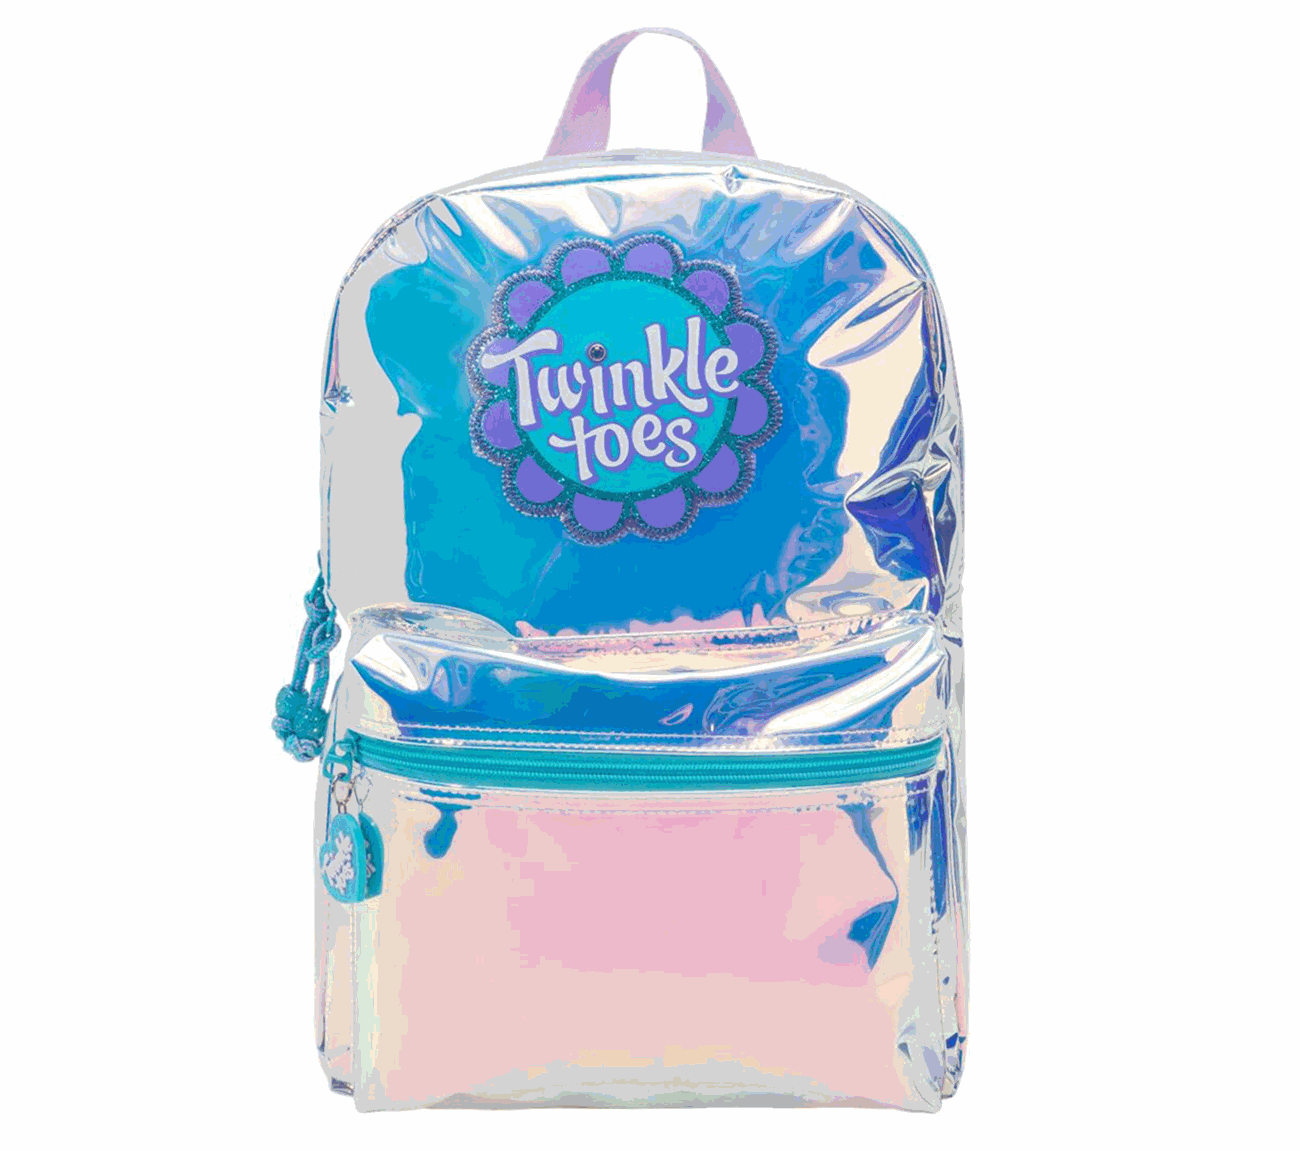 twinkle toes backpack